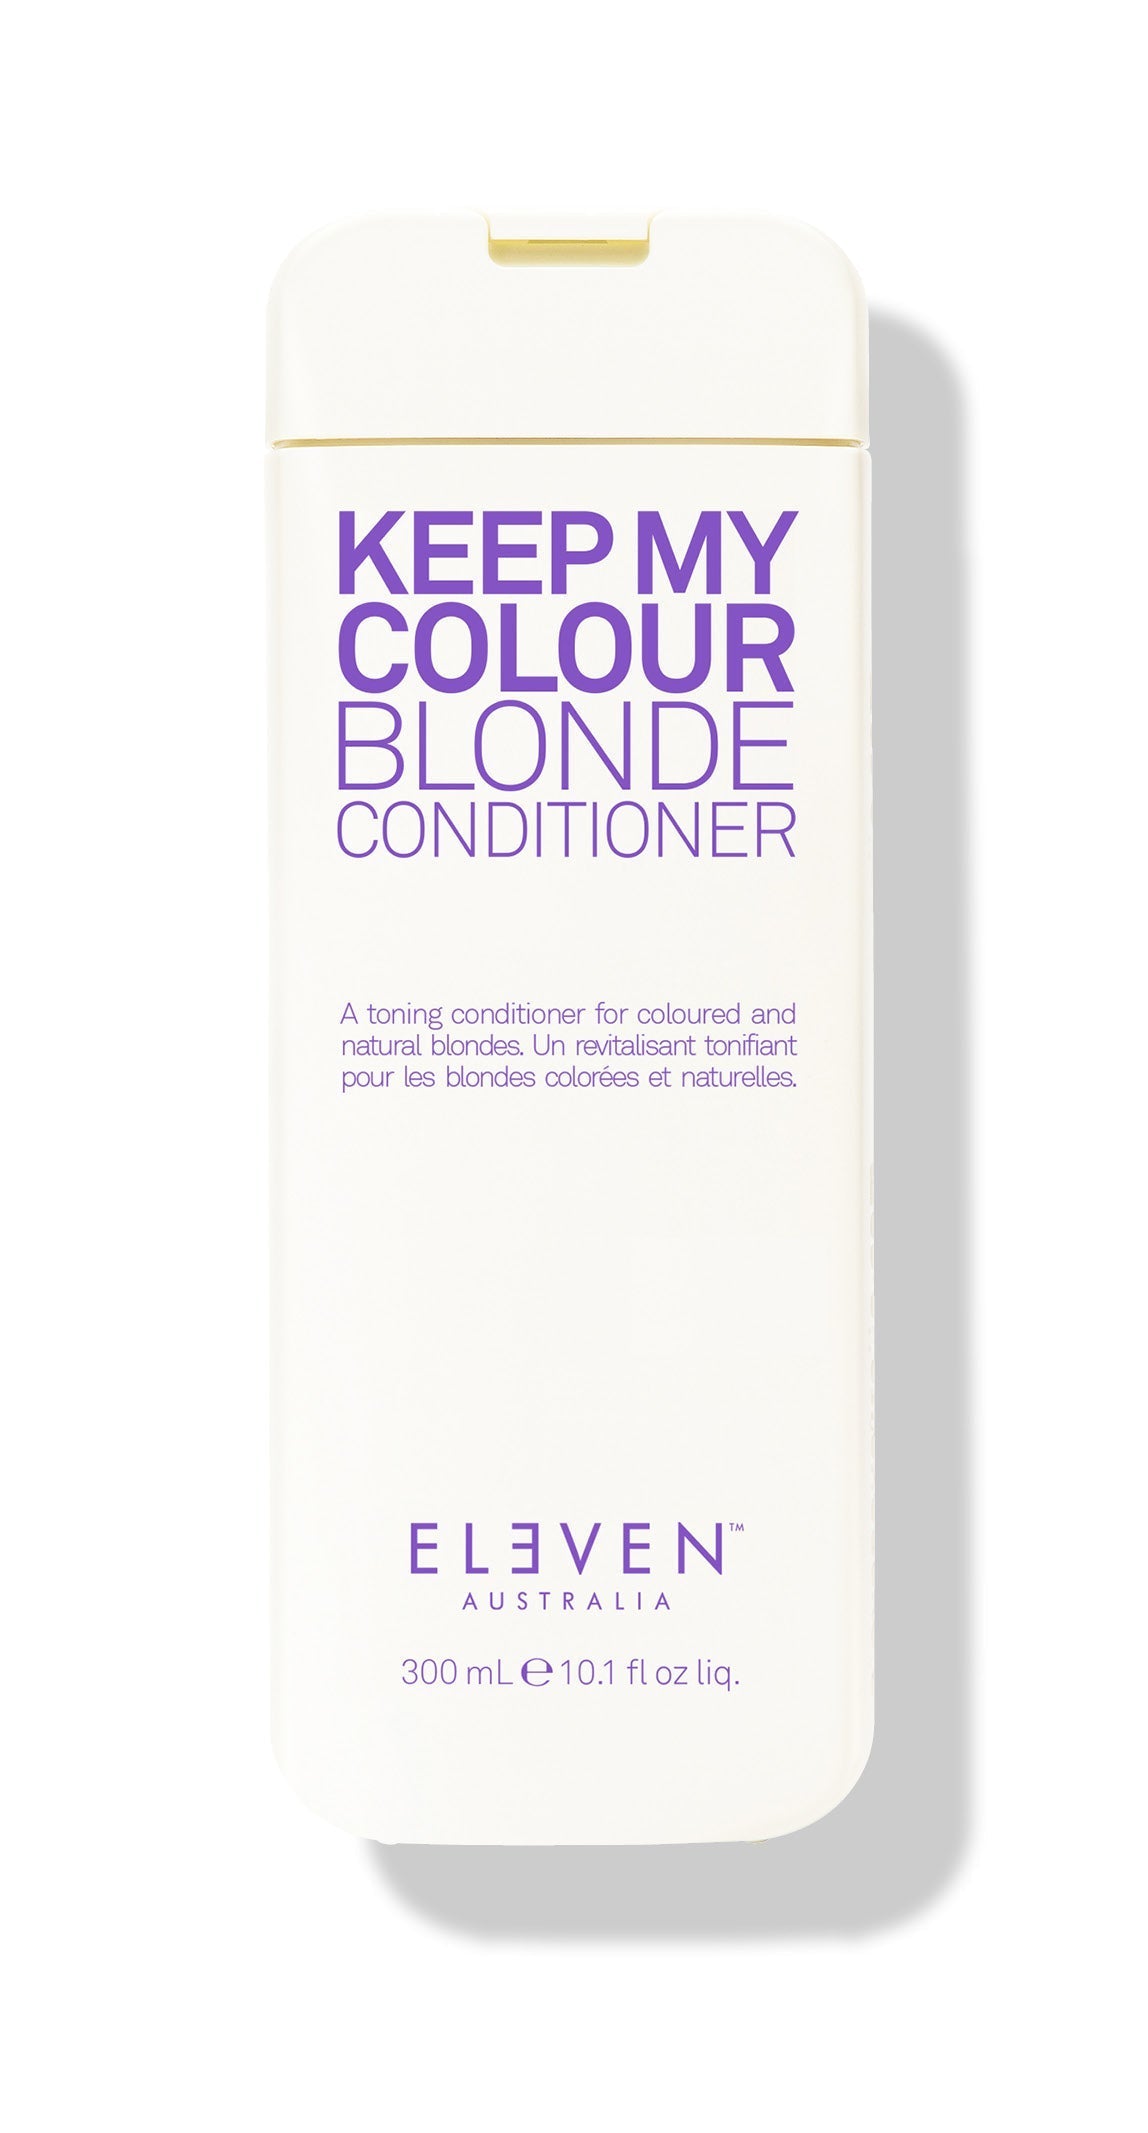 Keep My Colour Blonde Conditioner - 300ml - ELEVEN Australia